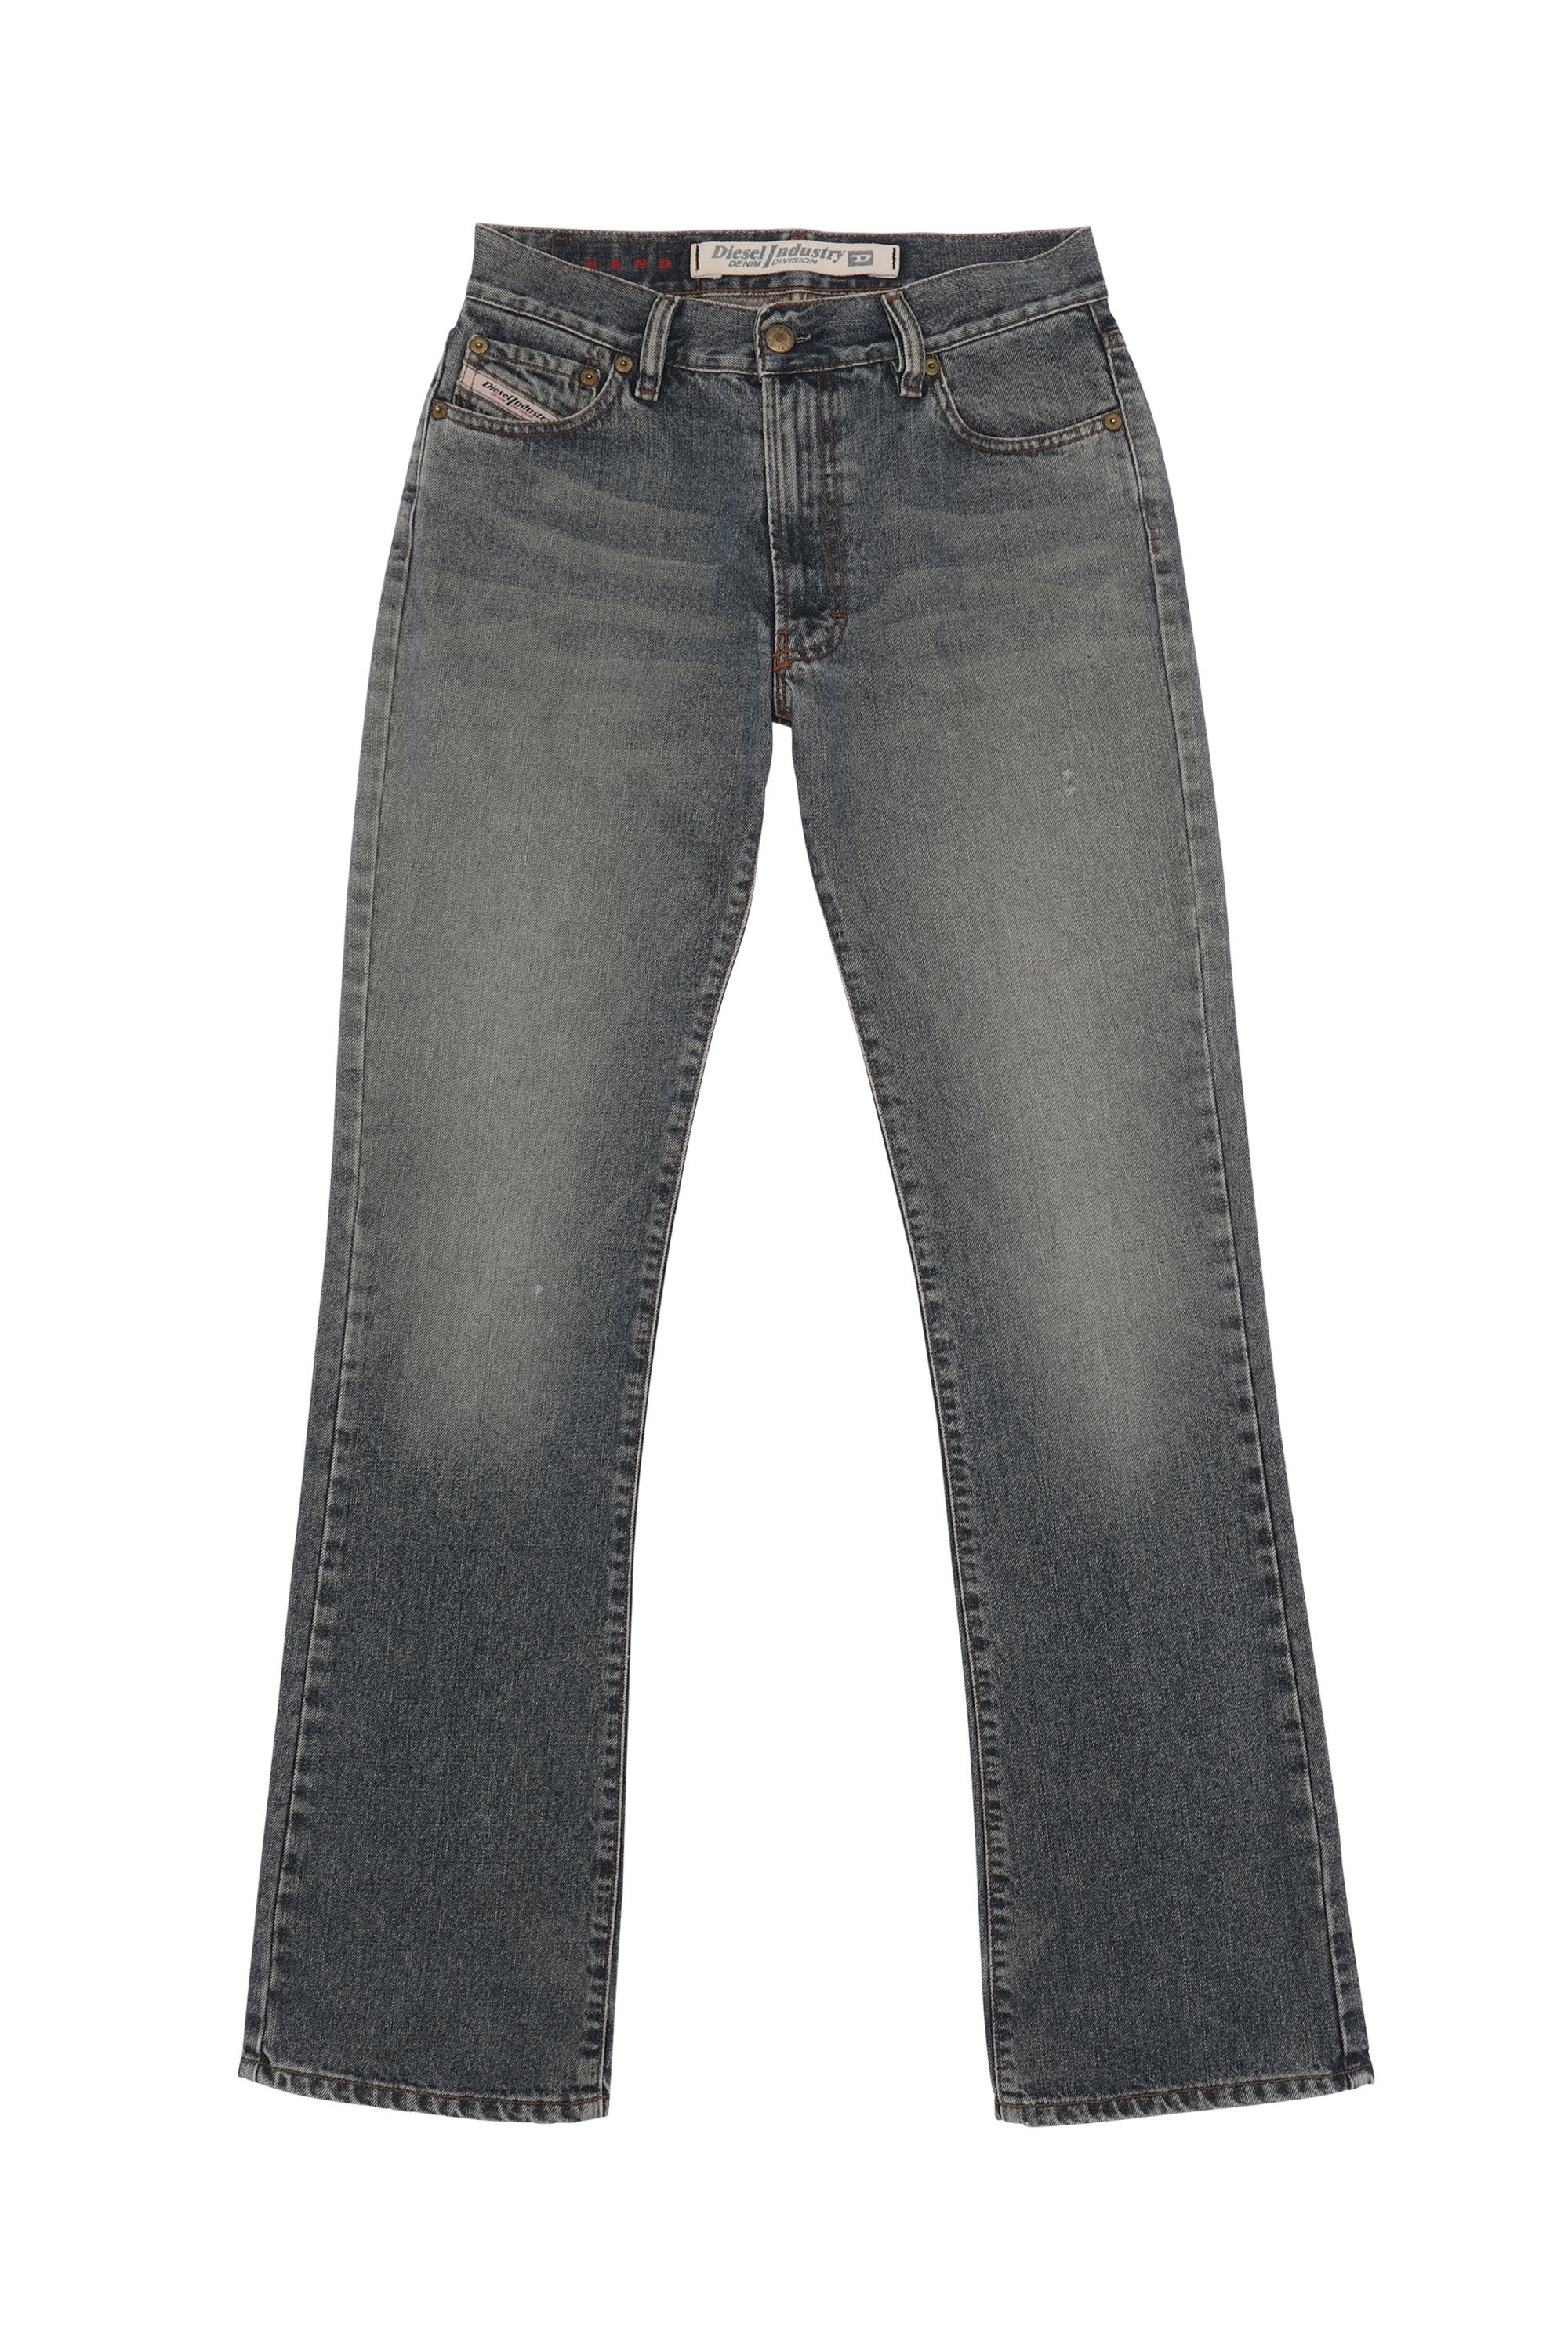 FANKER, Medium blue - Jeans